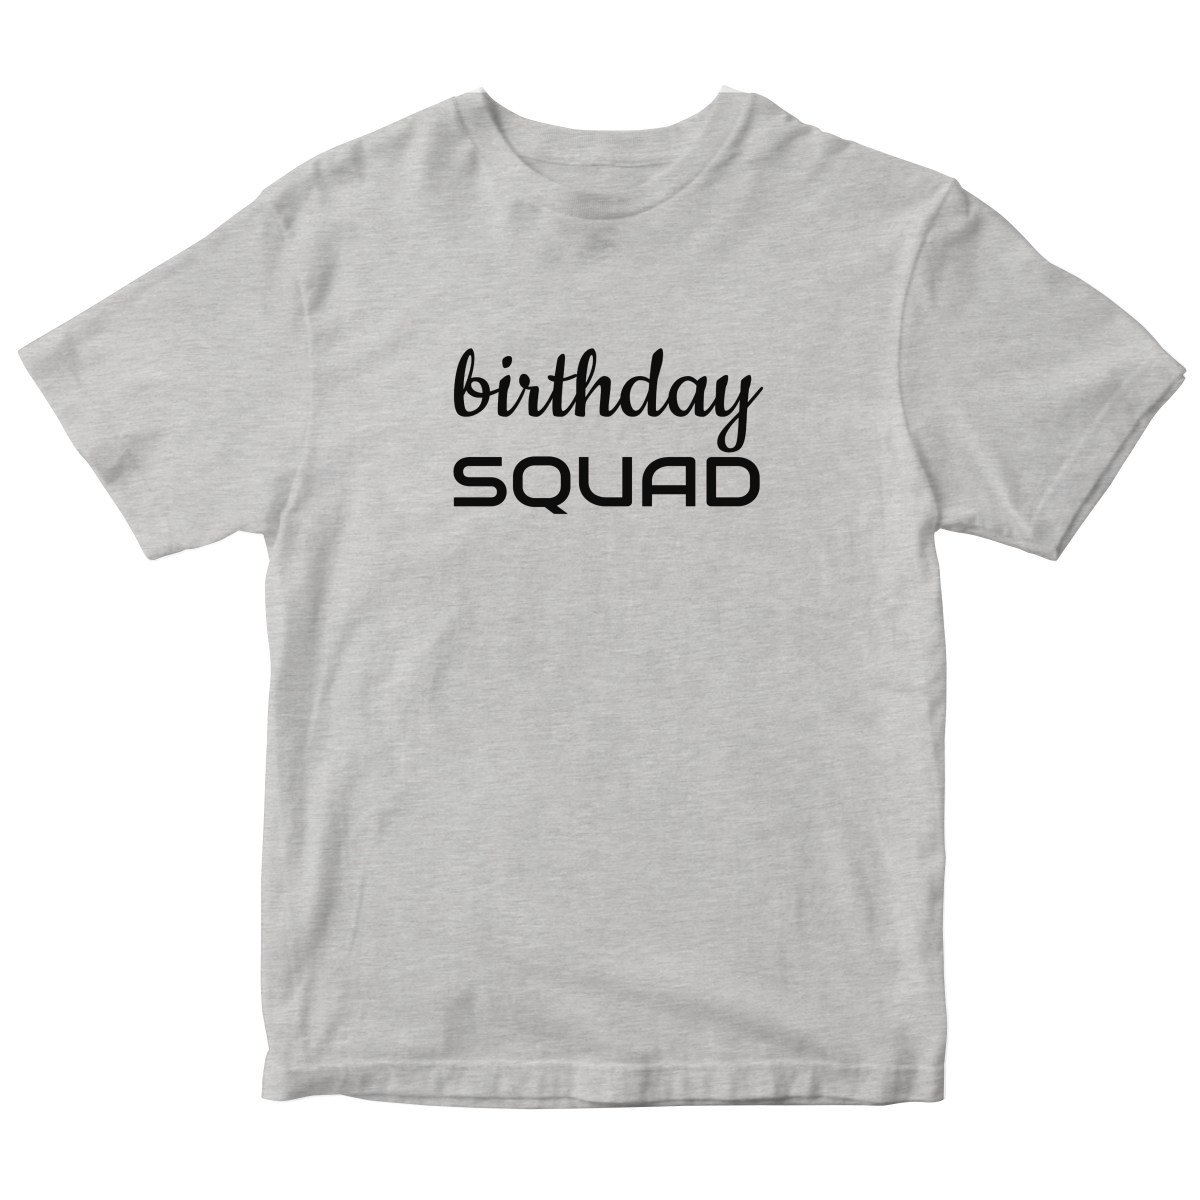 Birthday SQUAD Kids T-shirt | Gray